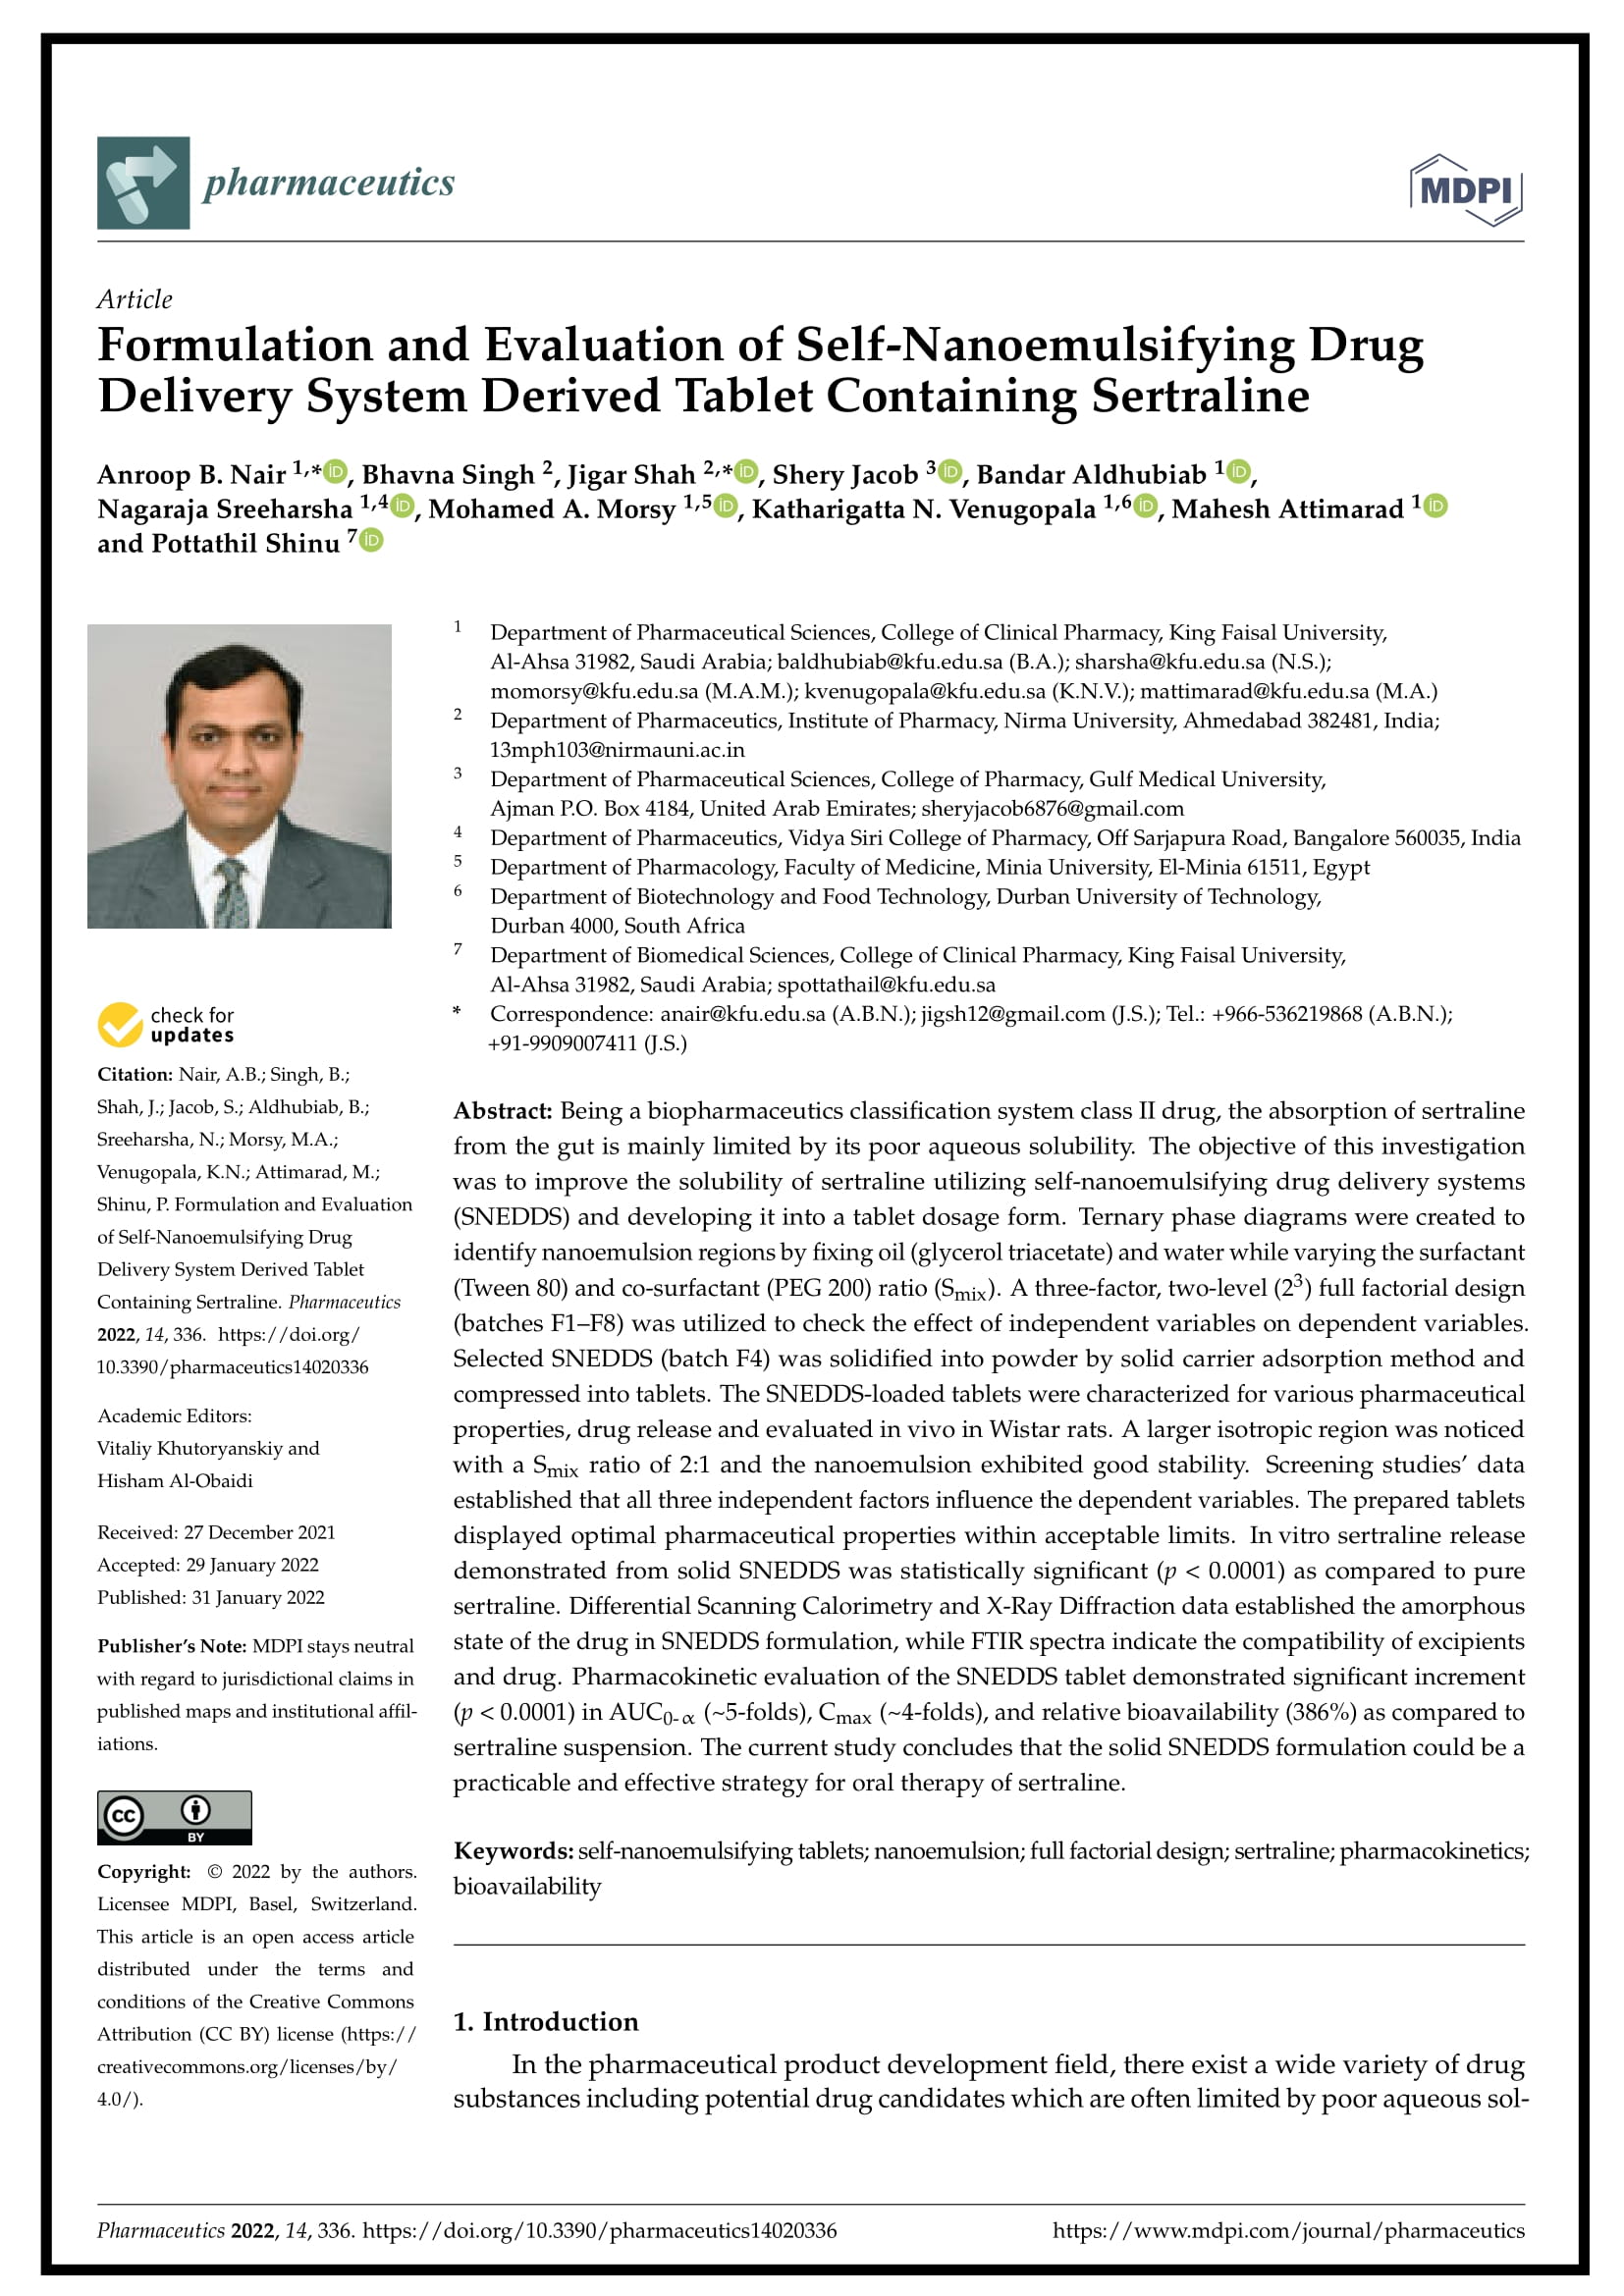 Formulation and Evaluation of Self-Nanoemulsifying Drug Delivery System Derived Tablet Containing Sertraline